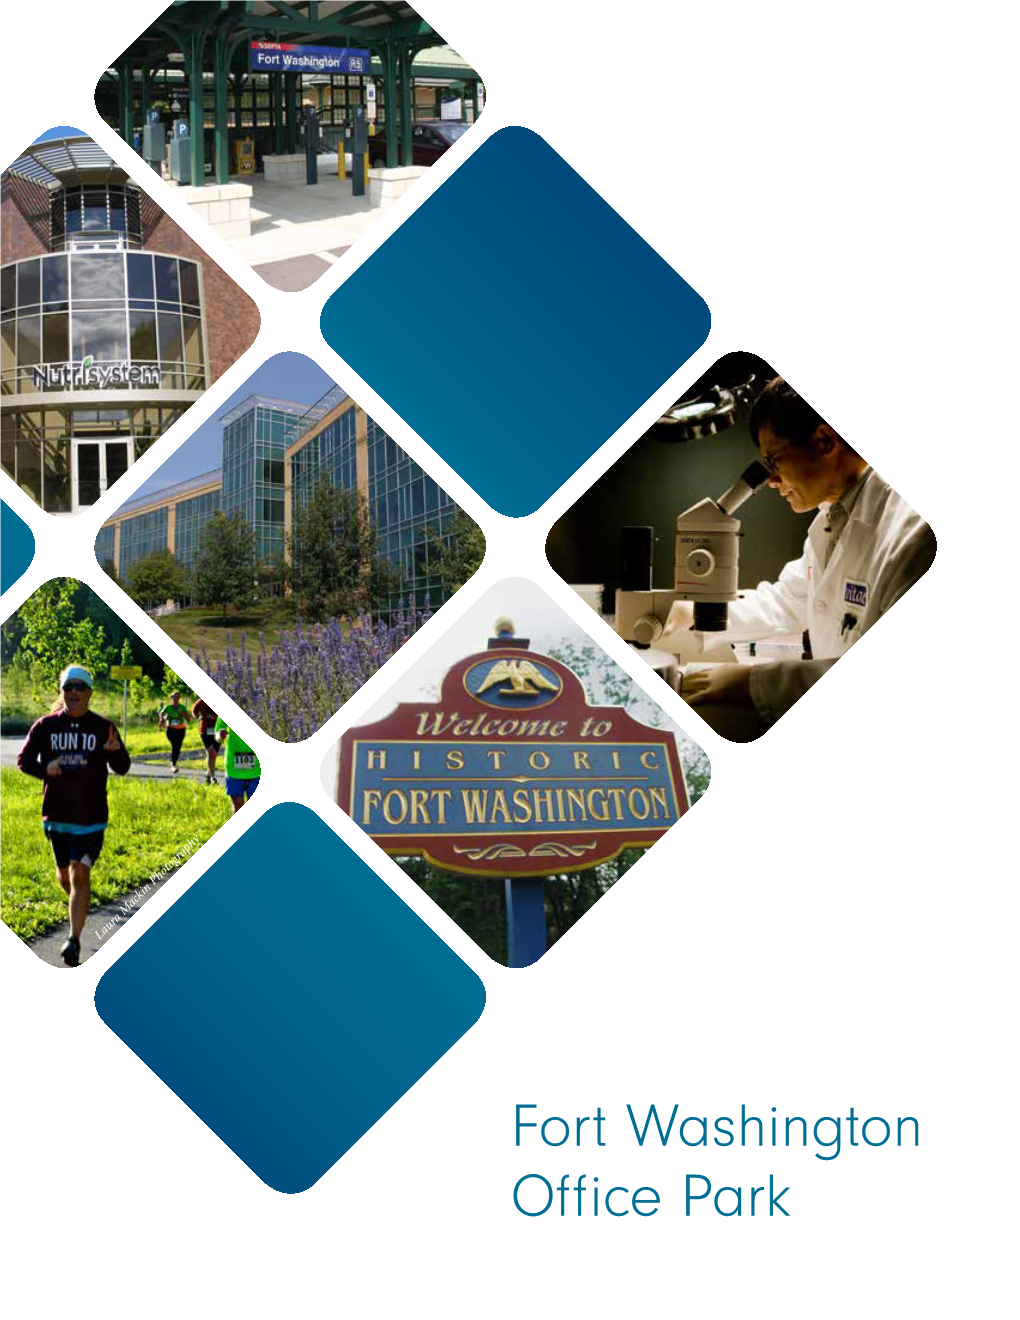 Fort Washington Office Park